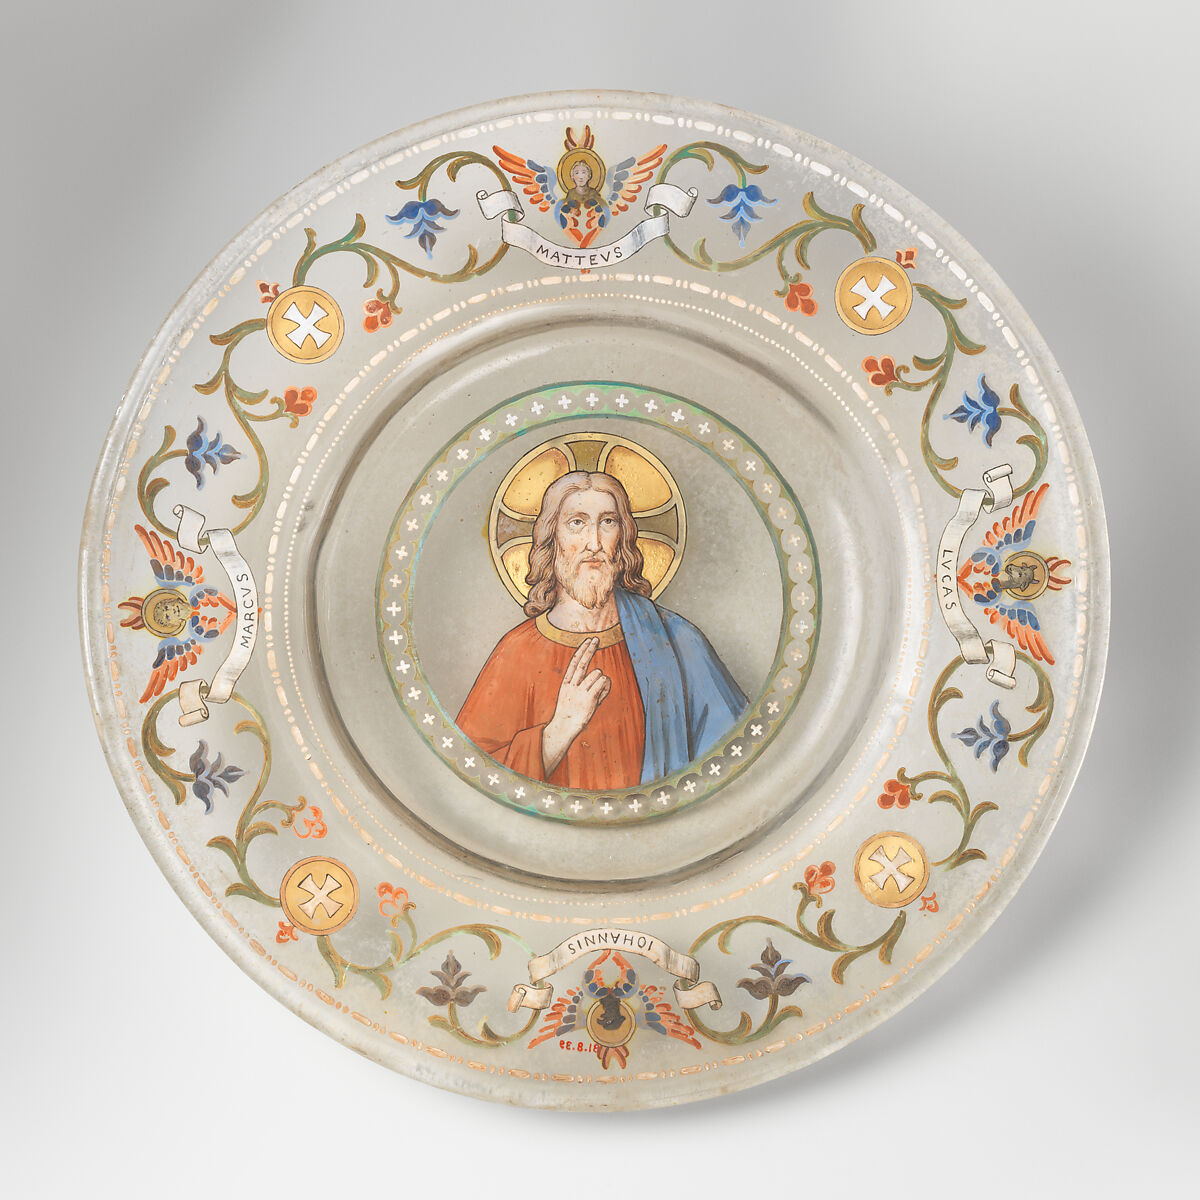 Renaissance-style dish with Christ and Four Evangelists, Probably Società Anonima per Azioni Salviati &amp; C. (Italian, 1866–1872), Glass: blown, enameled and gilded, Italian, Venice (Murano) 